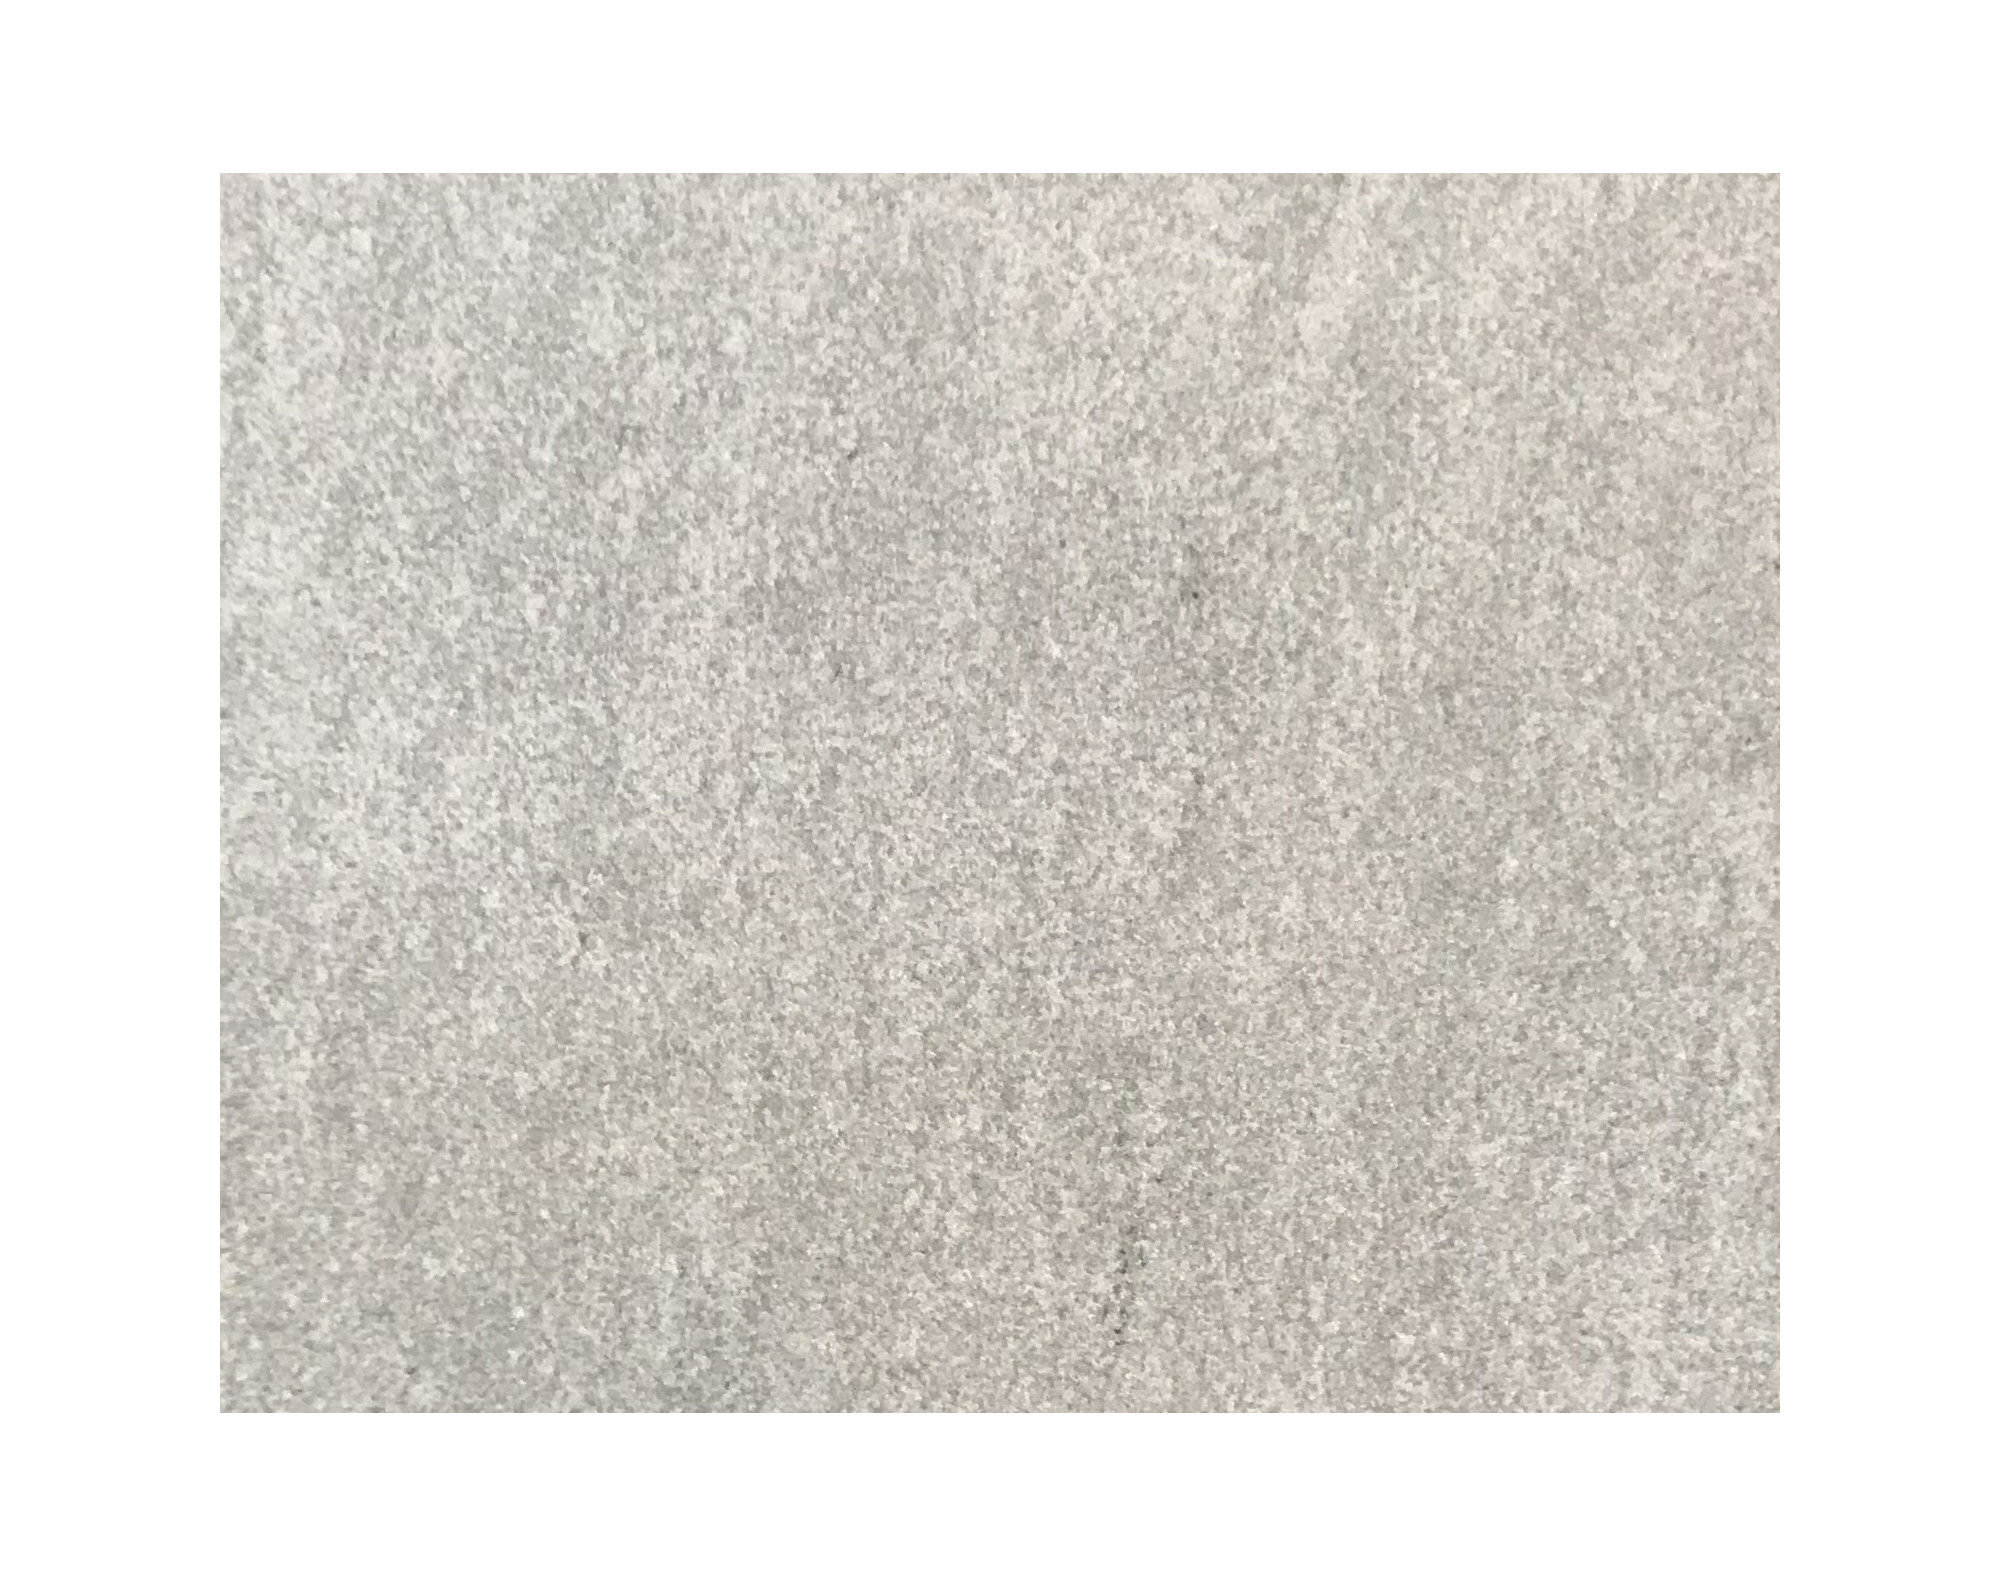 Harmo roc firenzeset, keramiek-serie, ovaal d: 6,00mx12,60m, zand grijs, keramisch porselein